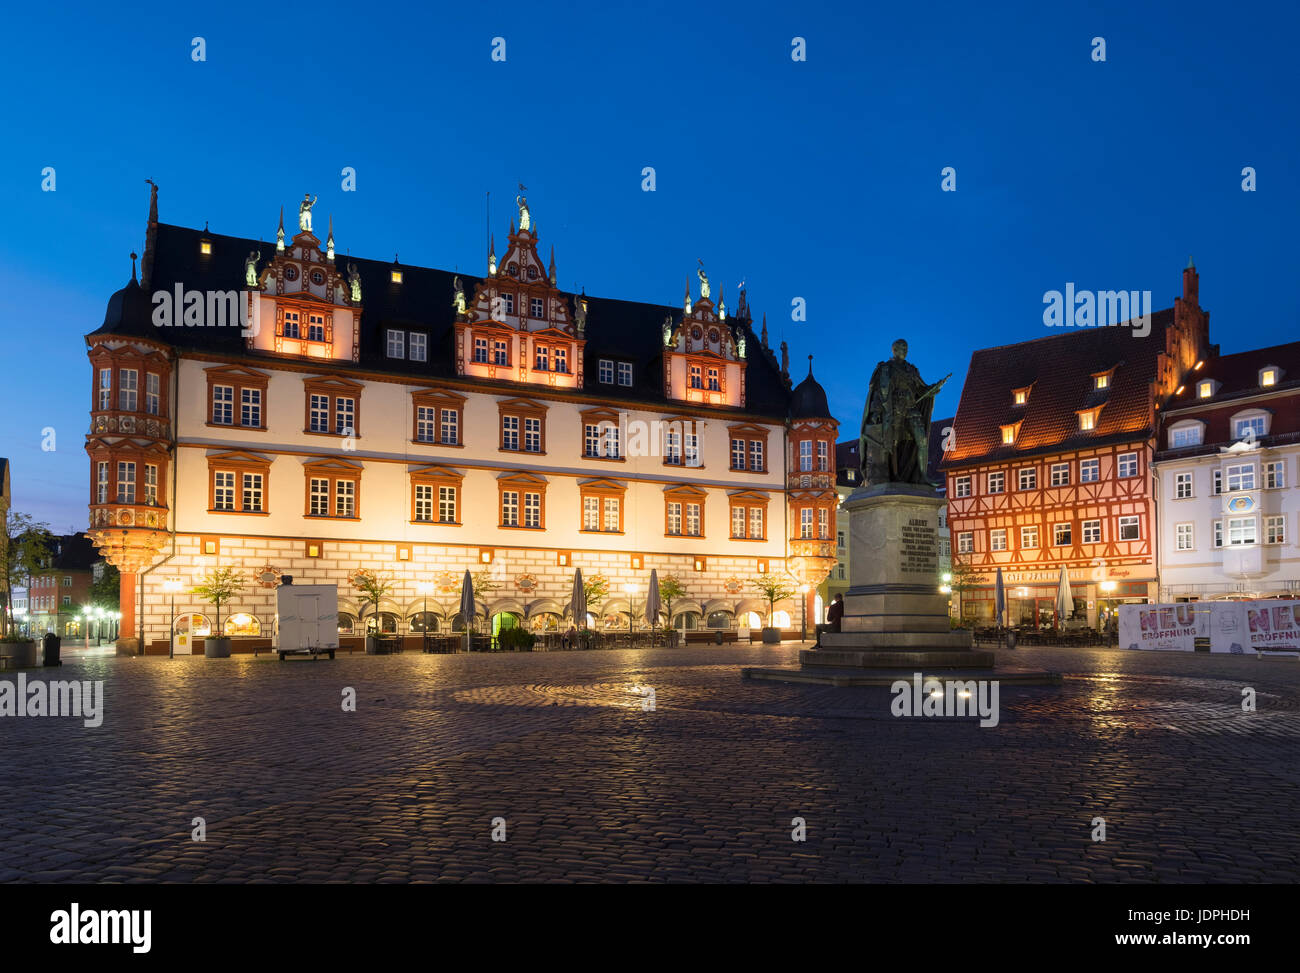 Stadthaus and Prince Albert Memorial, Marktplatz, Coburg, Upper Franconia, Franconia, Bavaria, Germany Stock Photo